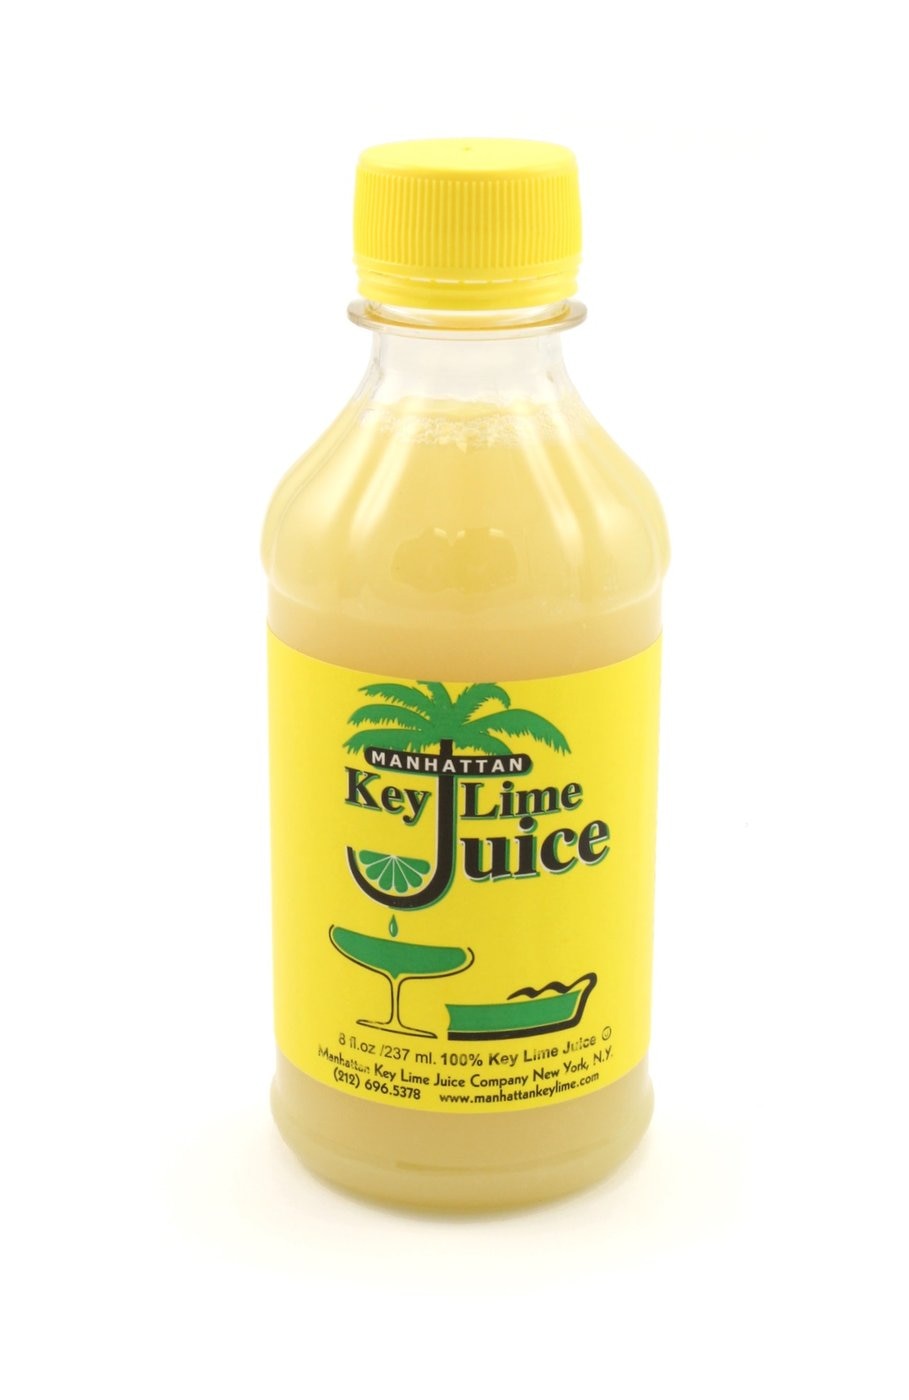 Key Lime Juice image zoom